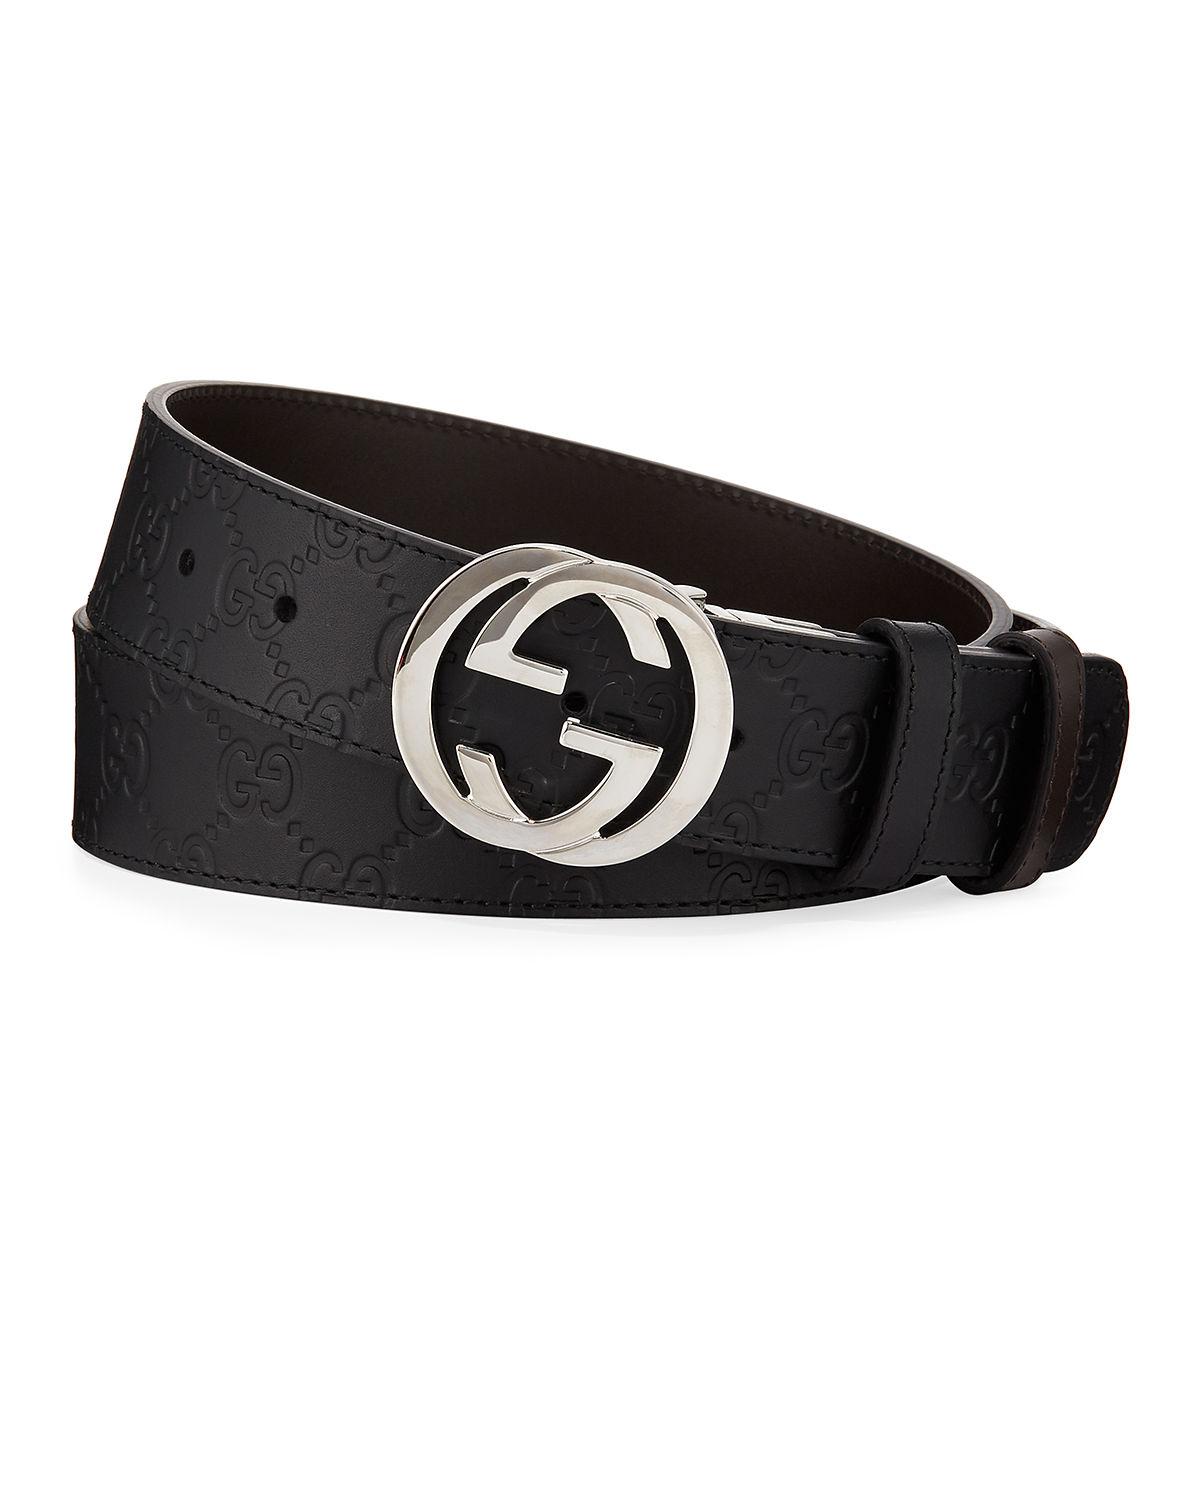 Gucci Interlocking G Leather Belt in Brown (Black) for Men - Save 47% - Lyst